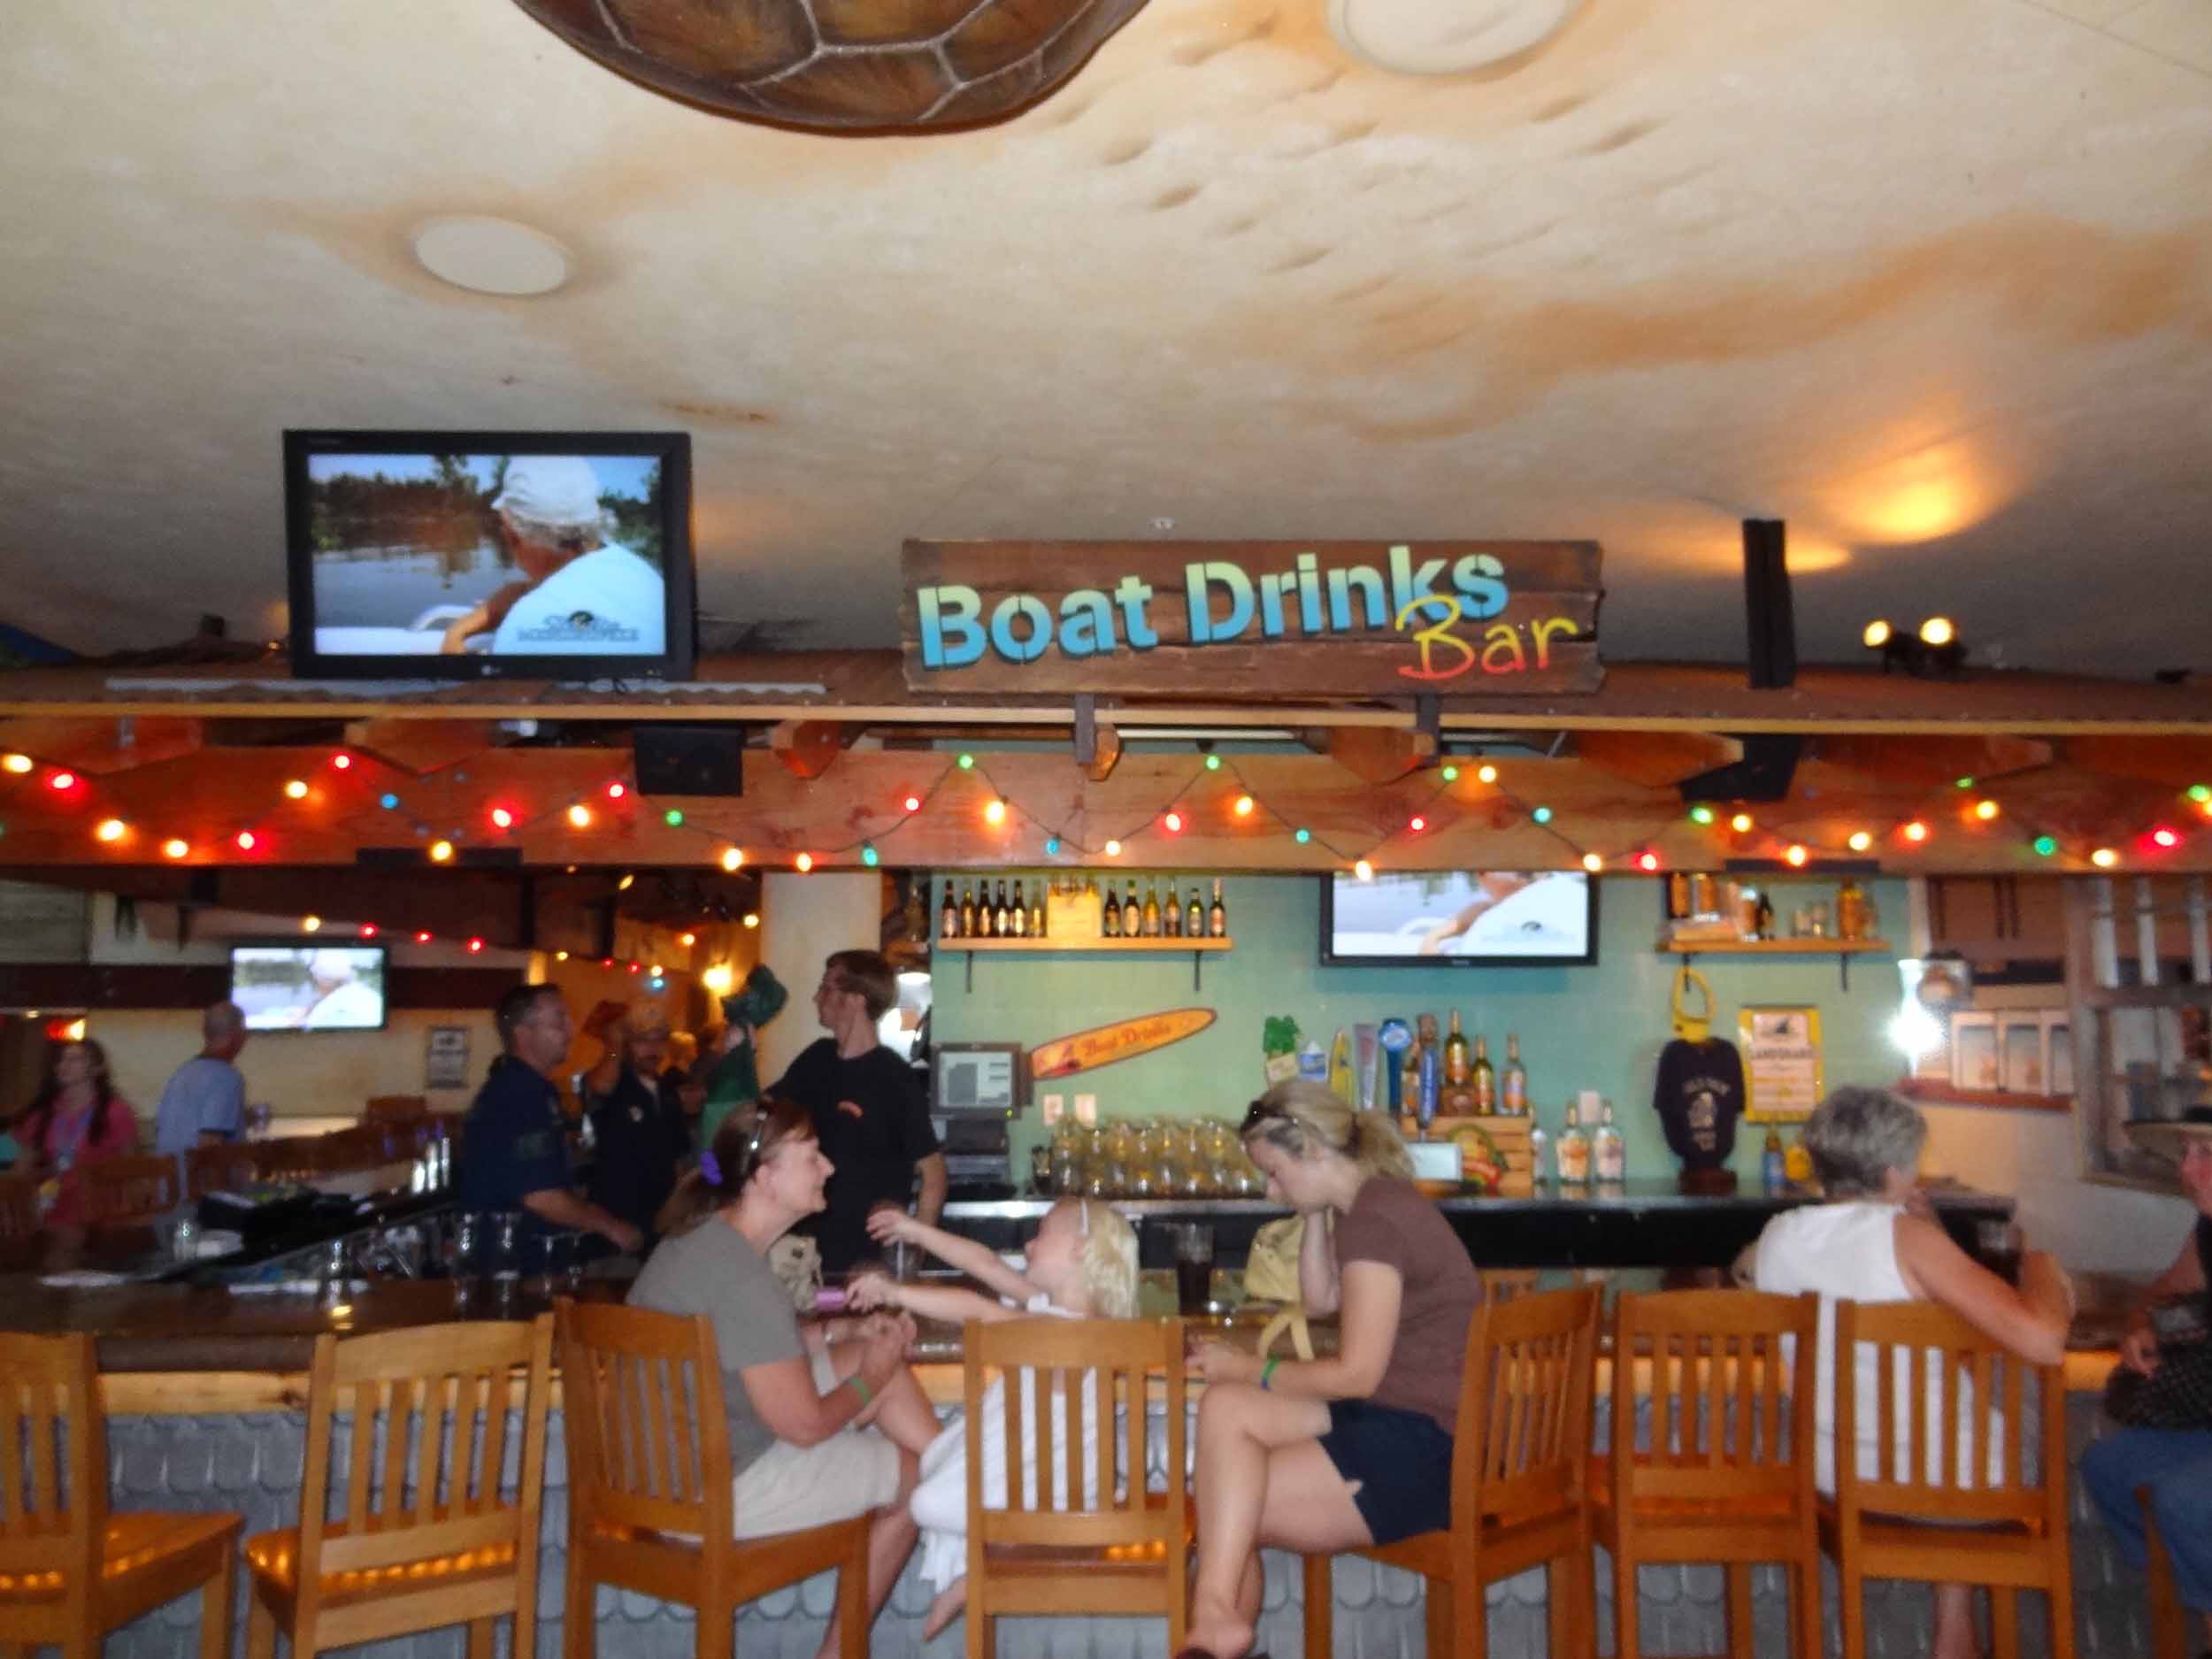 Jimmy Buffett's Margaritaville Boat Drinks Bar